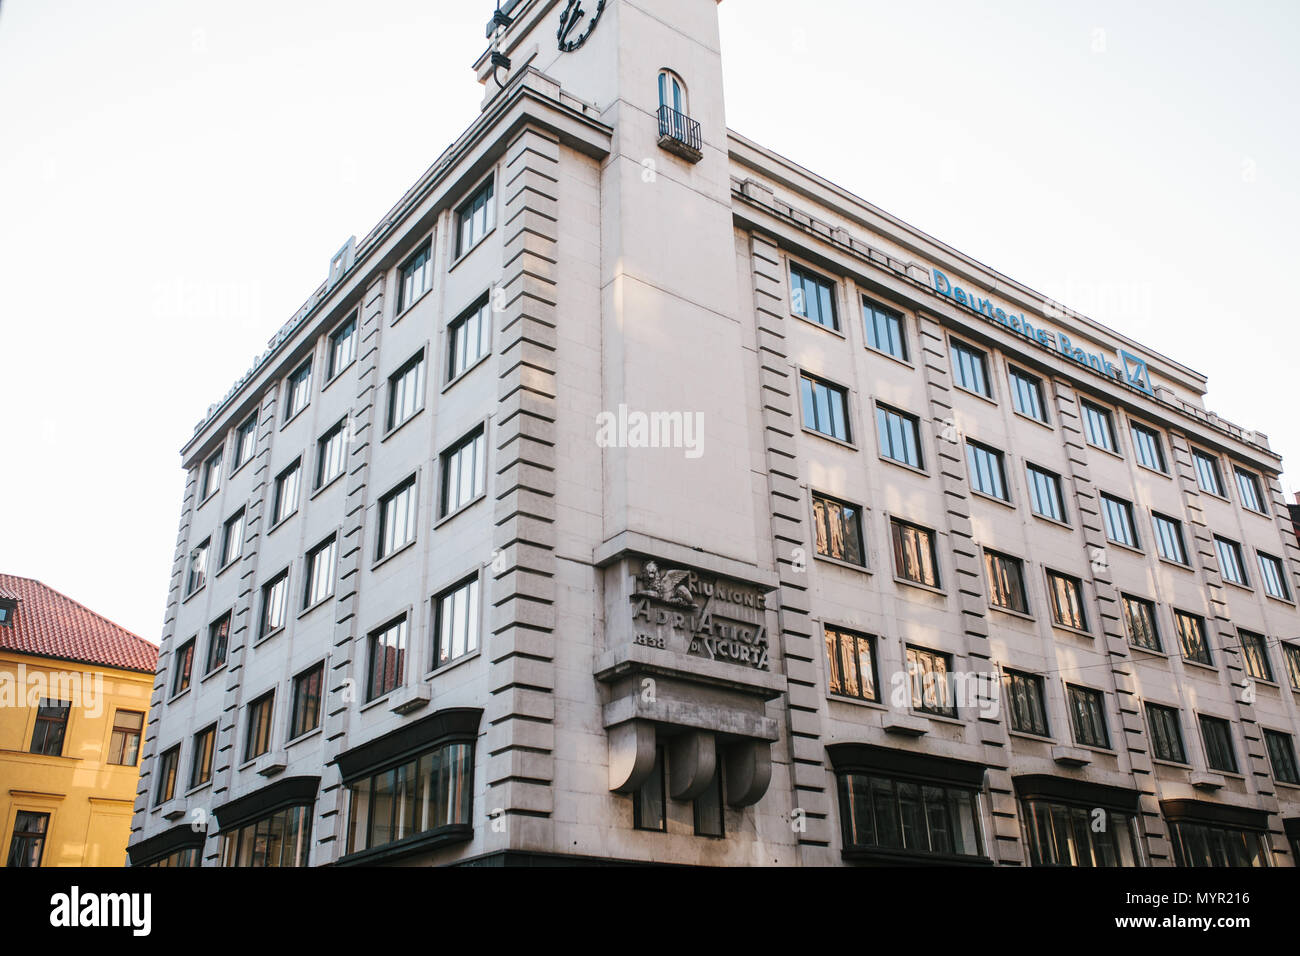 Prague, September 21, 2017: The building in which Deutsche Bank is located. Representation of German Deutsche Bank in the Czech Republic Stock Photo